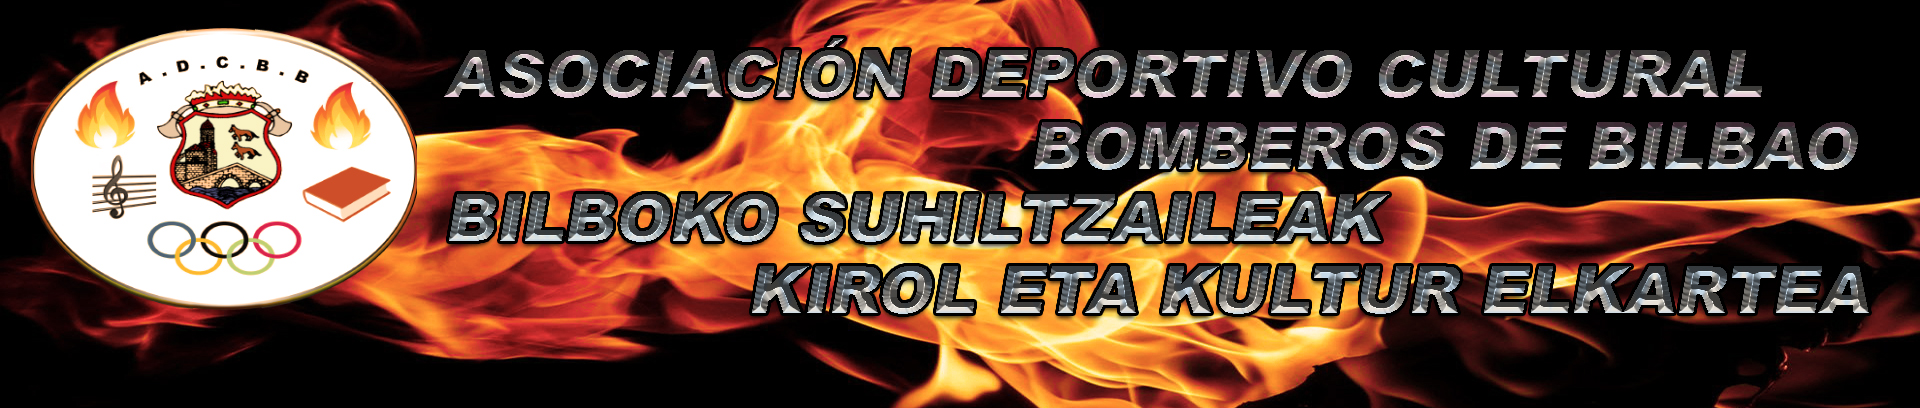 ASOCIACION DEPORTIVO CULTURAL BOMBEROS DE BILBAO